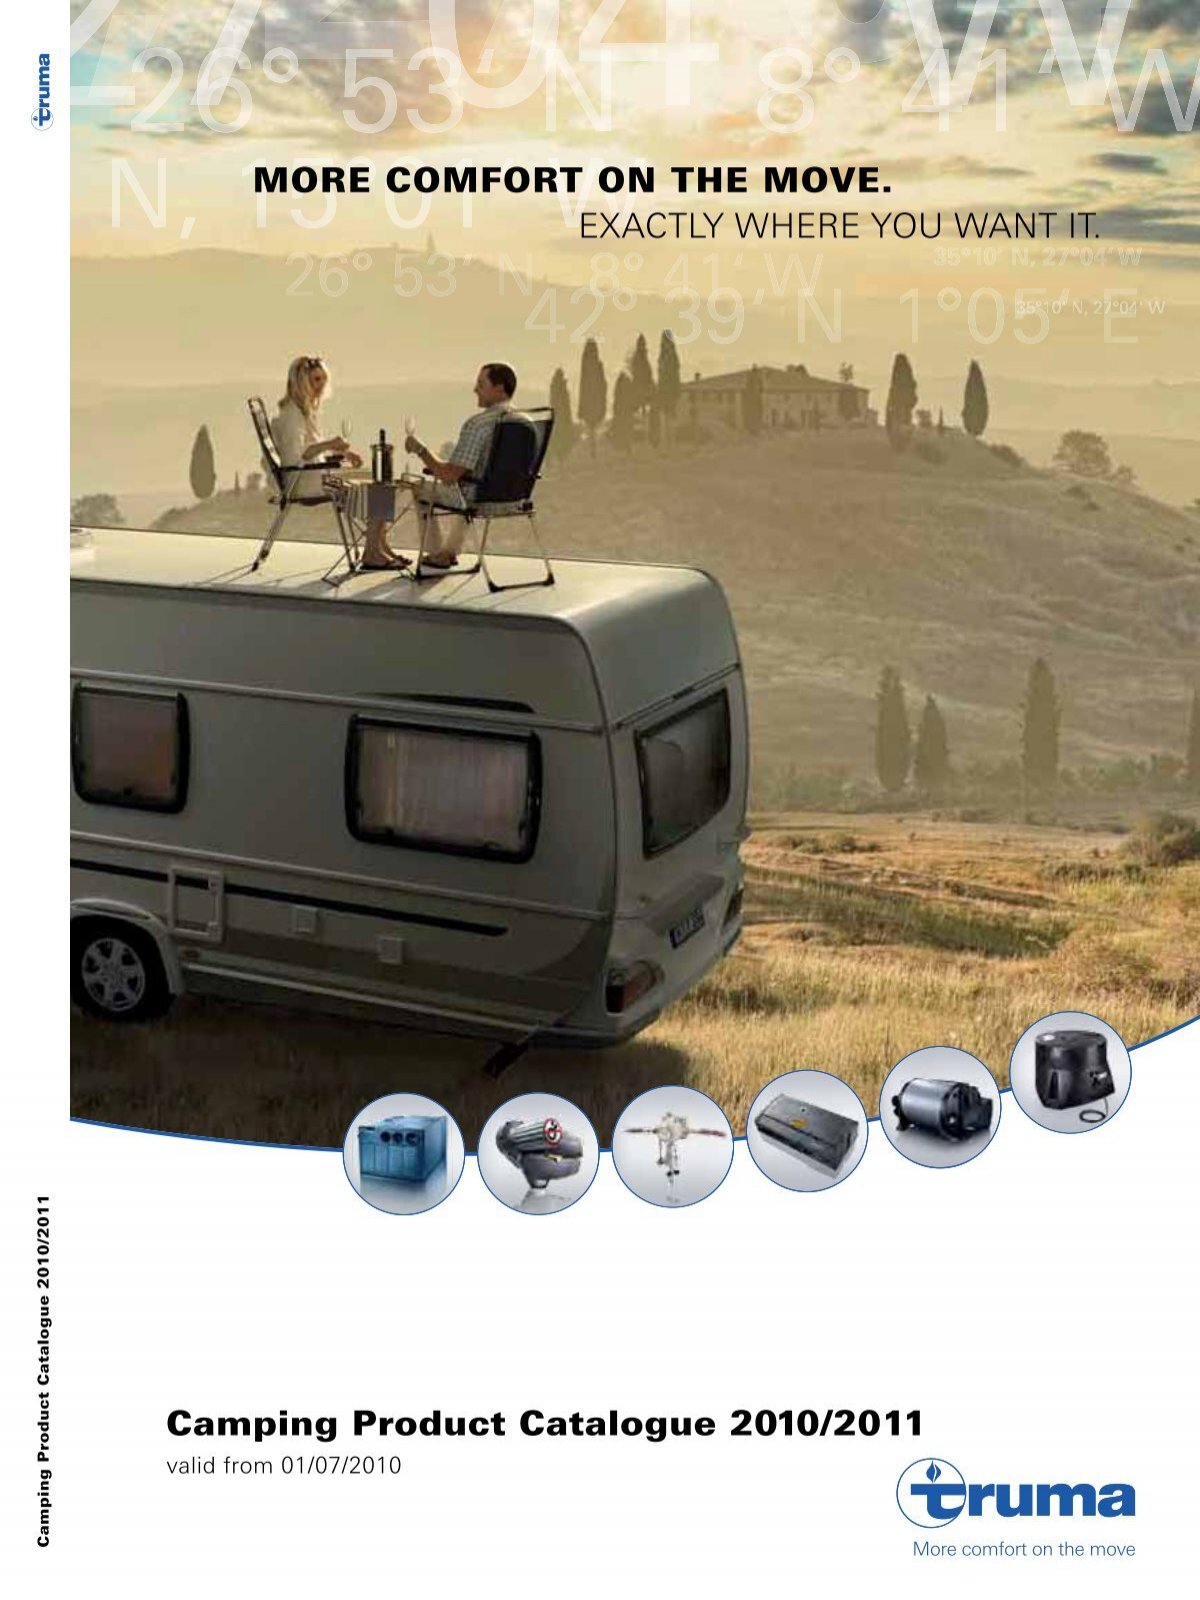 vedtage Svække filter Camping Product Catalogue 2010/2011 MORE COMFORT ON THE ...